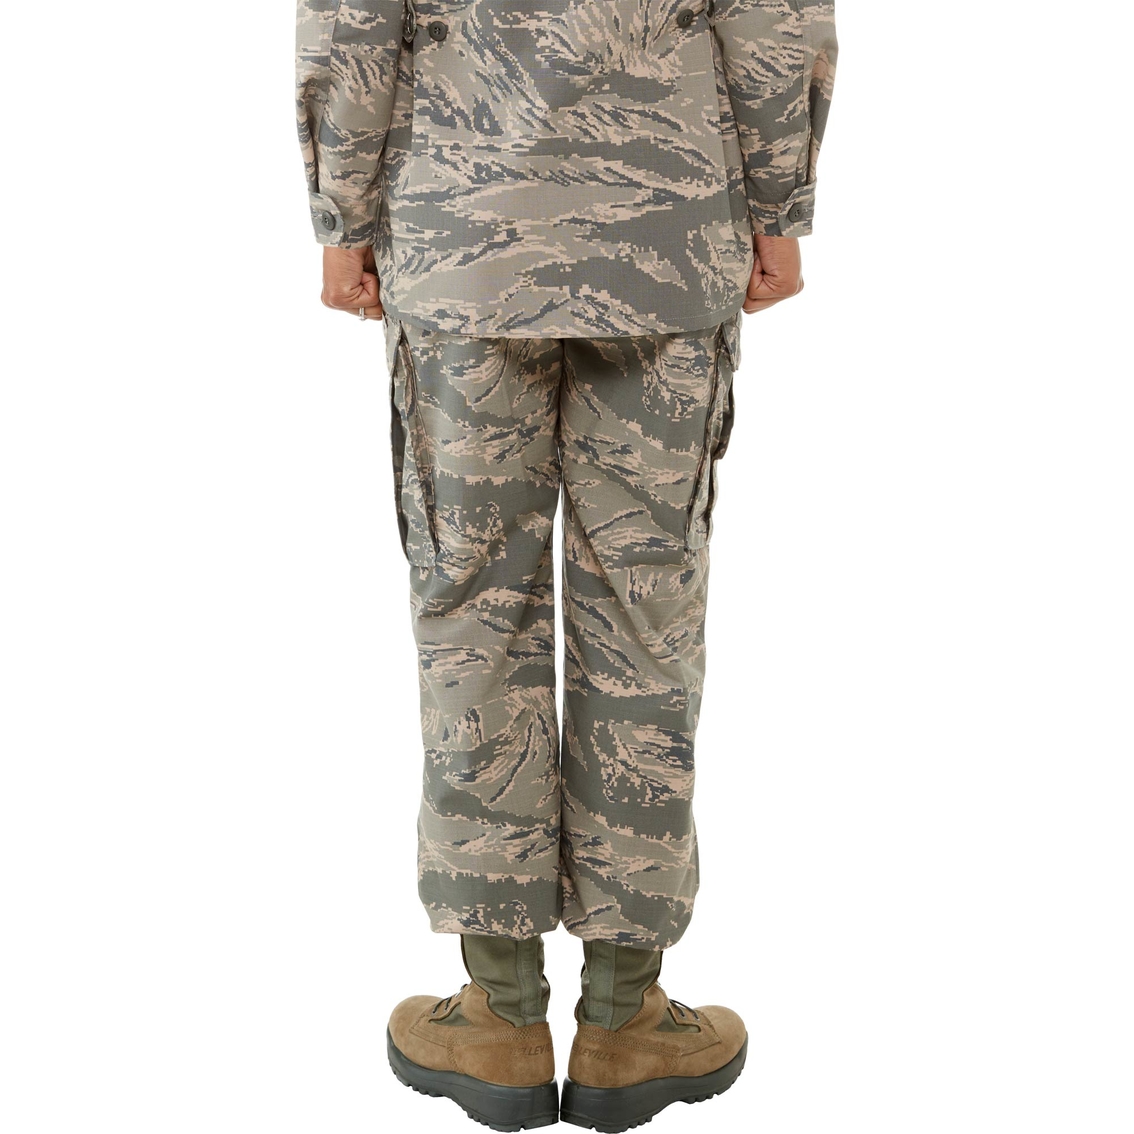 DLATS Air Force Maternity Airman Battle Uniform (MABU) Slacks - Image 2 of 5